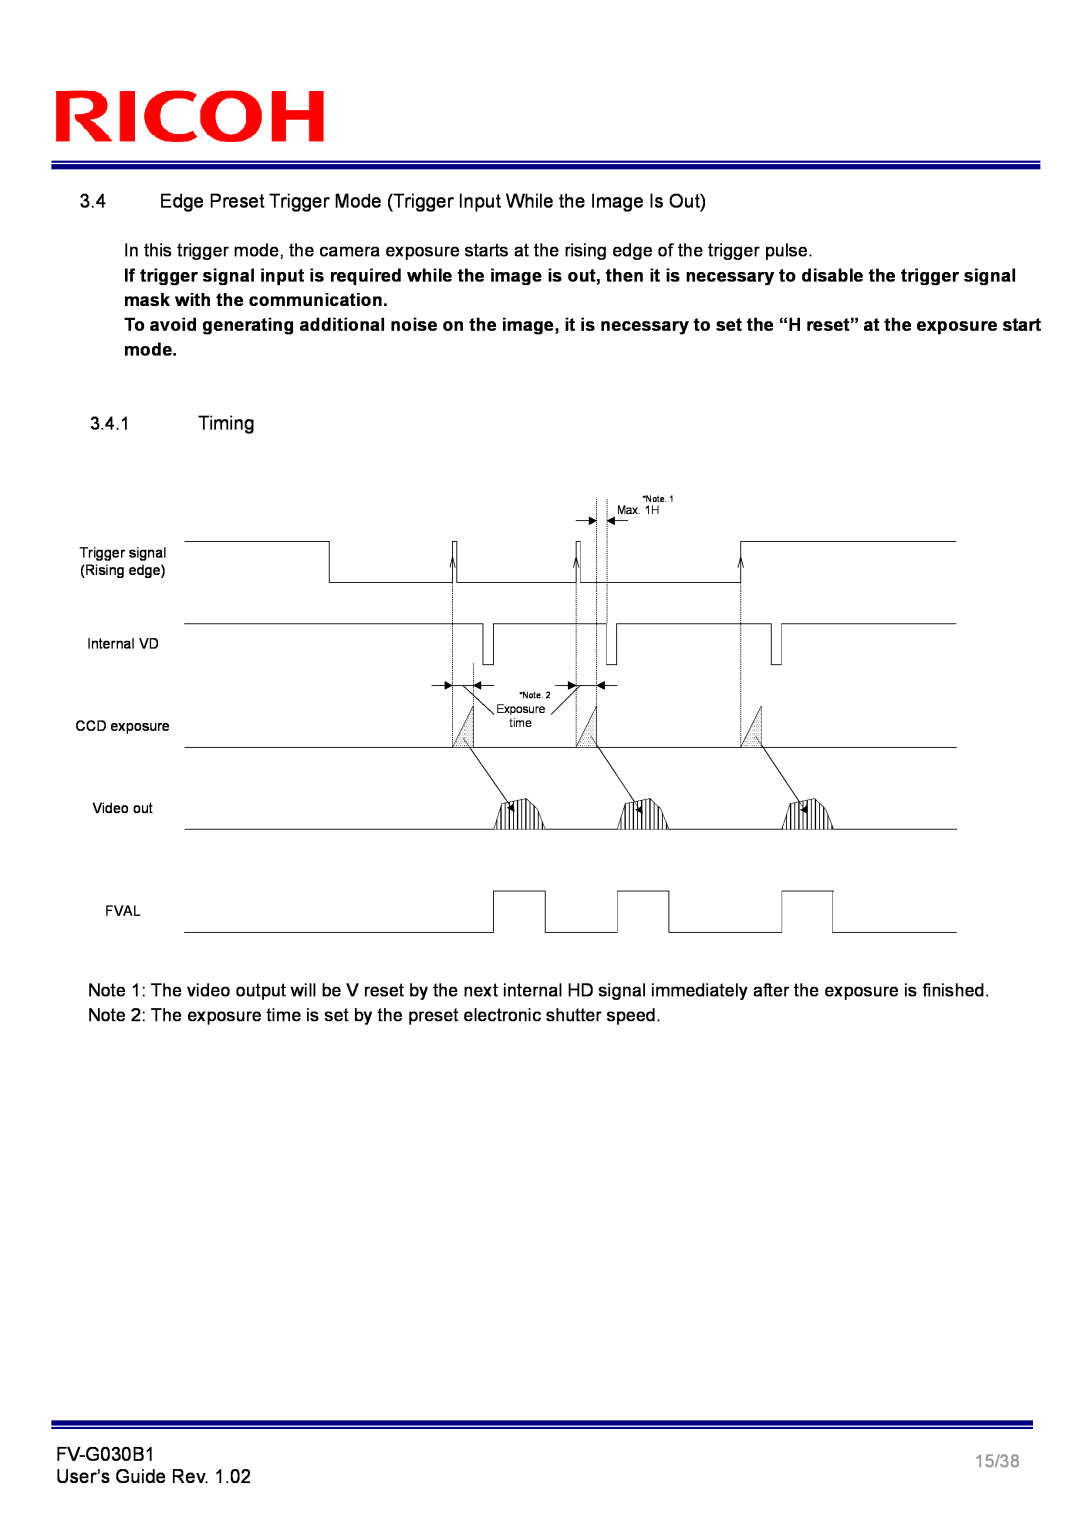 Ricoh FV-G030B1 manual 3.4.1Timing, User’s Guide Rev, 15/38 